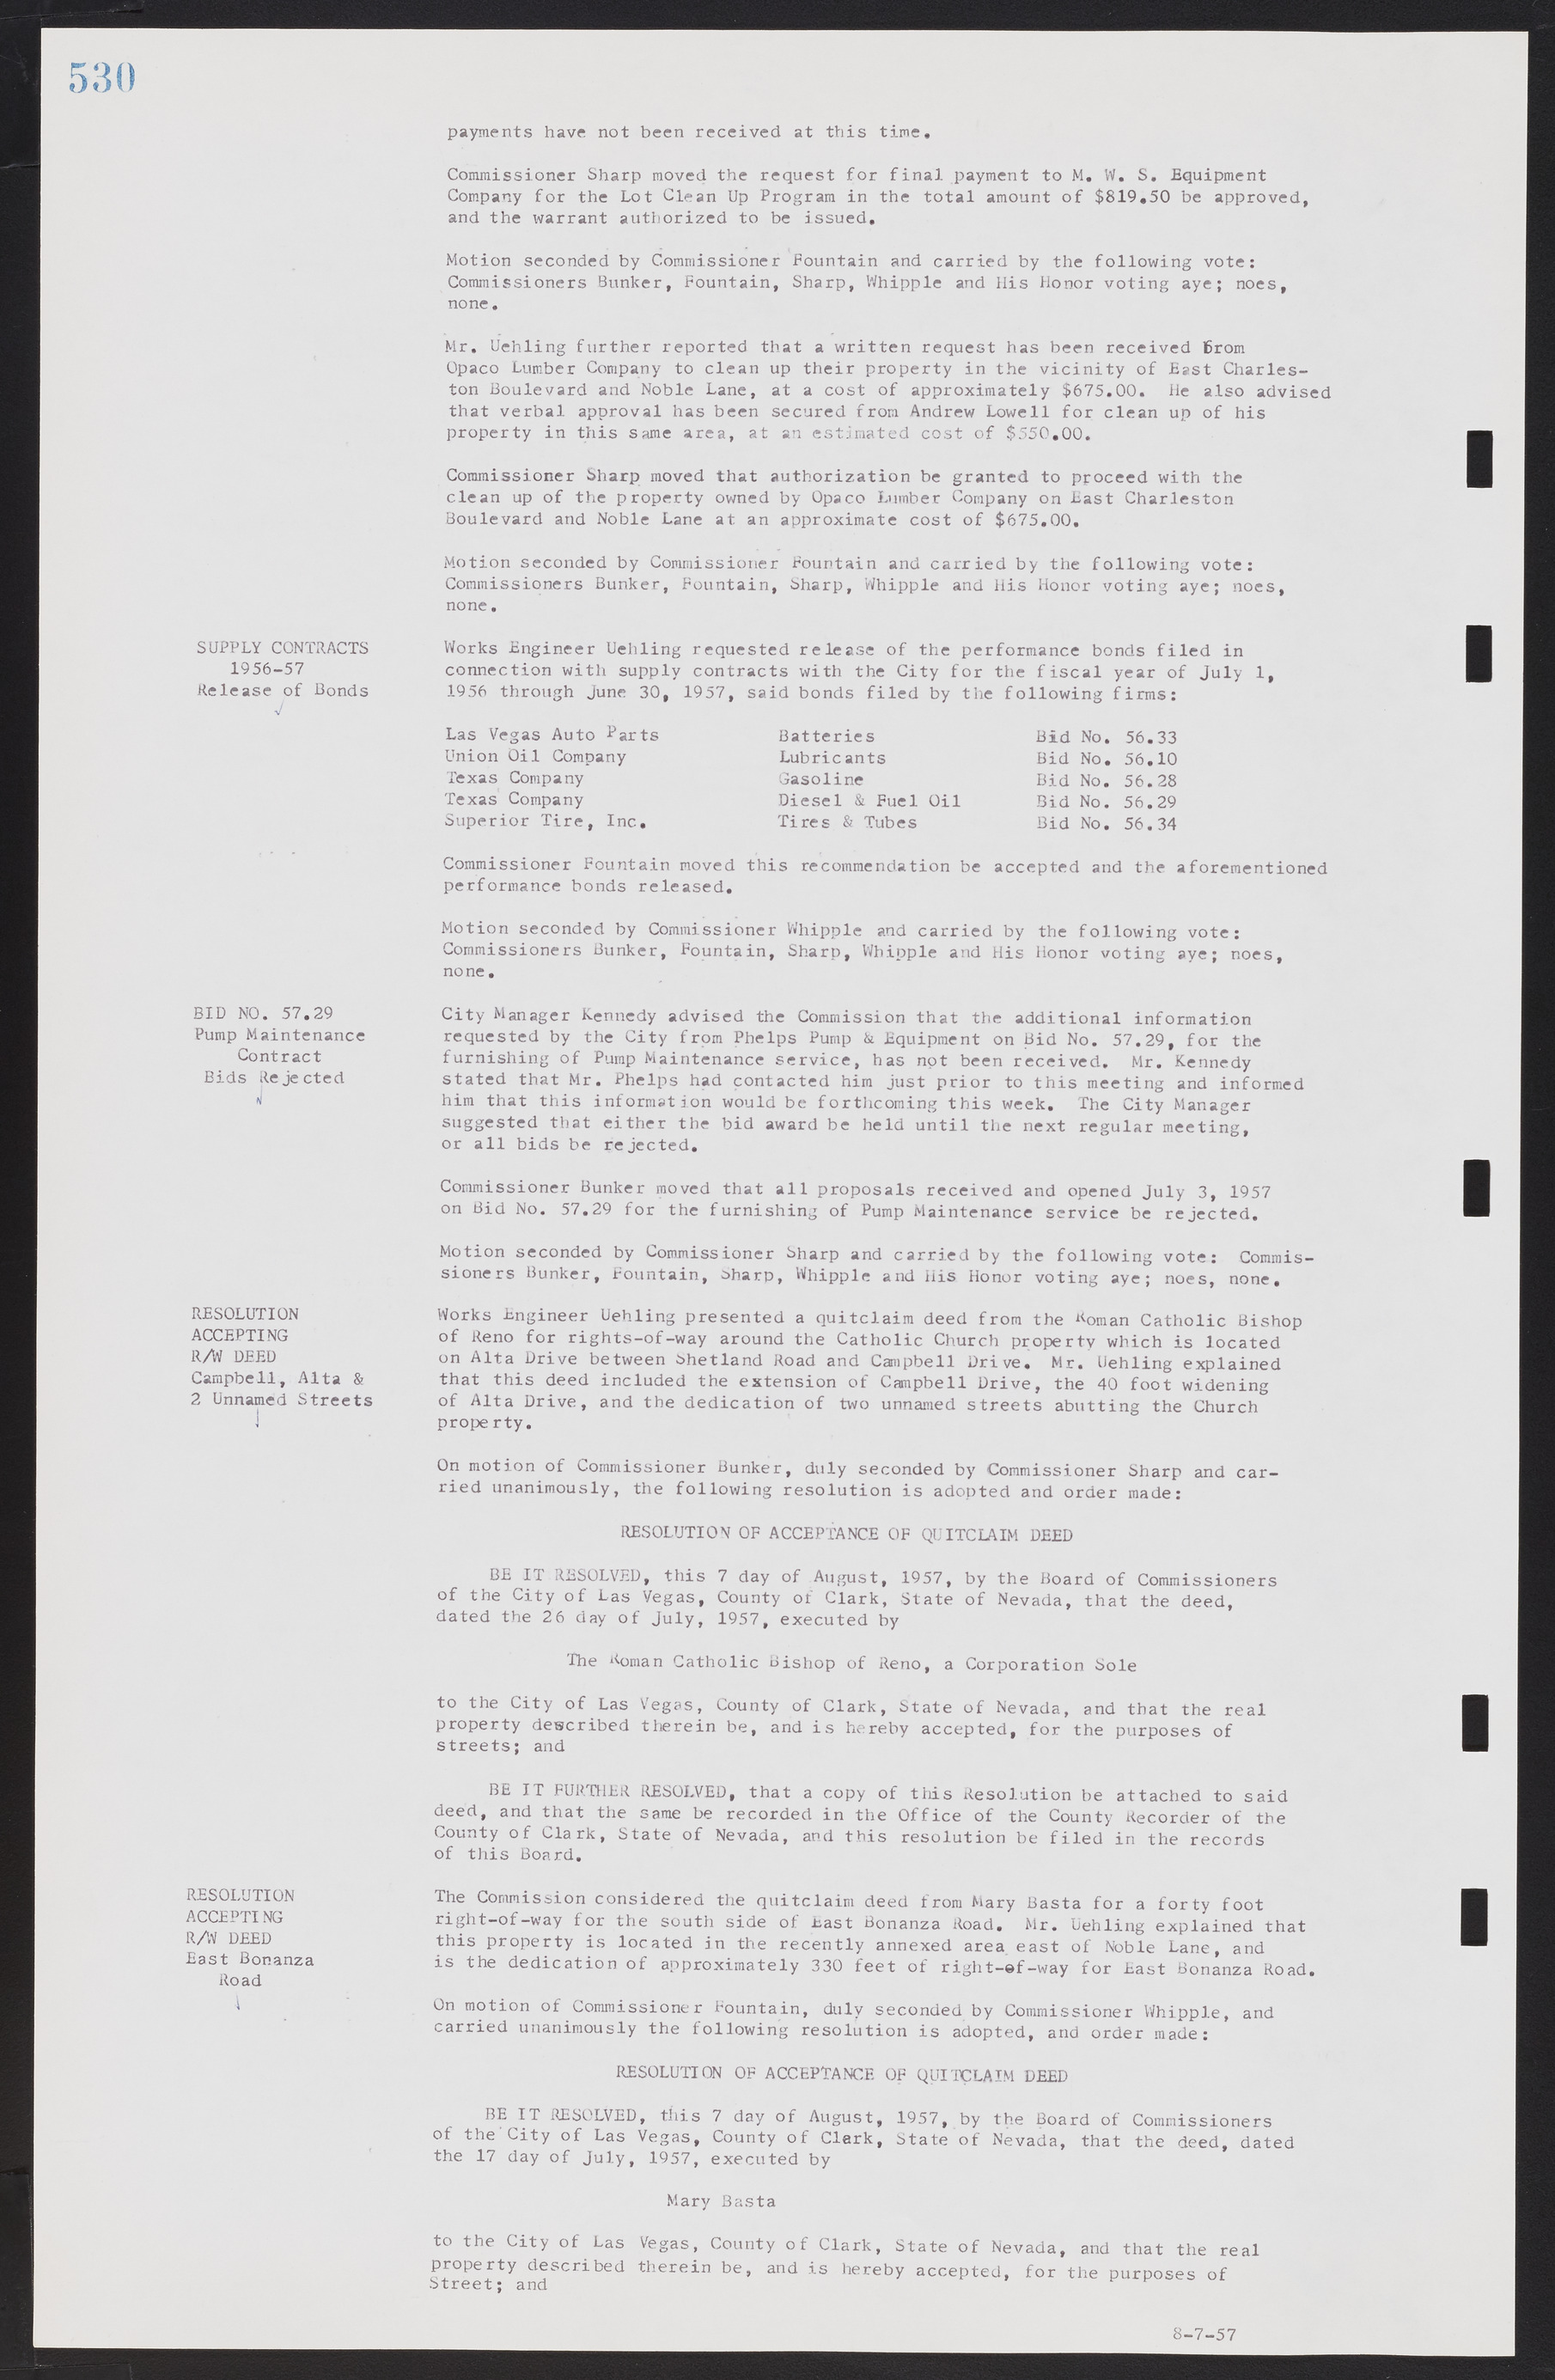 Las Vegas City Commission Minutes, September 21, 1955 to November 20, 1957, lvc000010-550